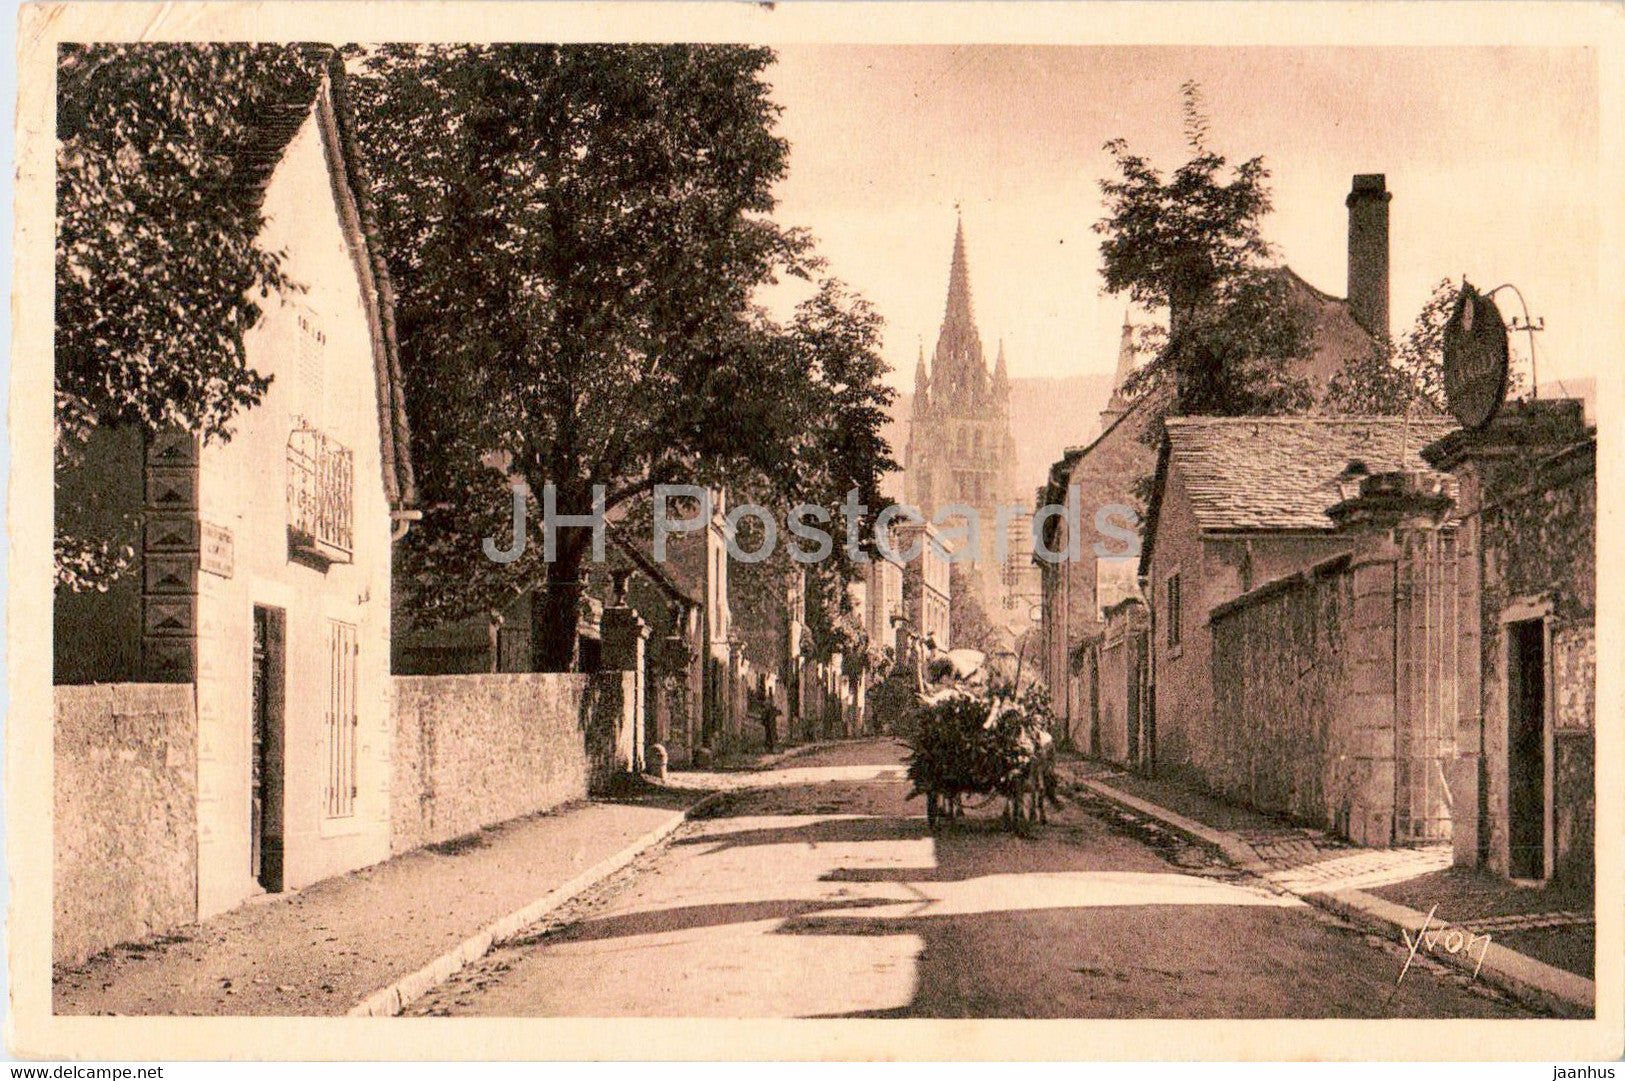 Mende - Perspective sur la Cathedrale - La Douce France - 5 - old postcard - France - used - JH Postcards